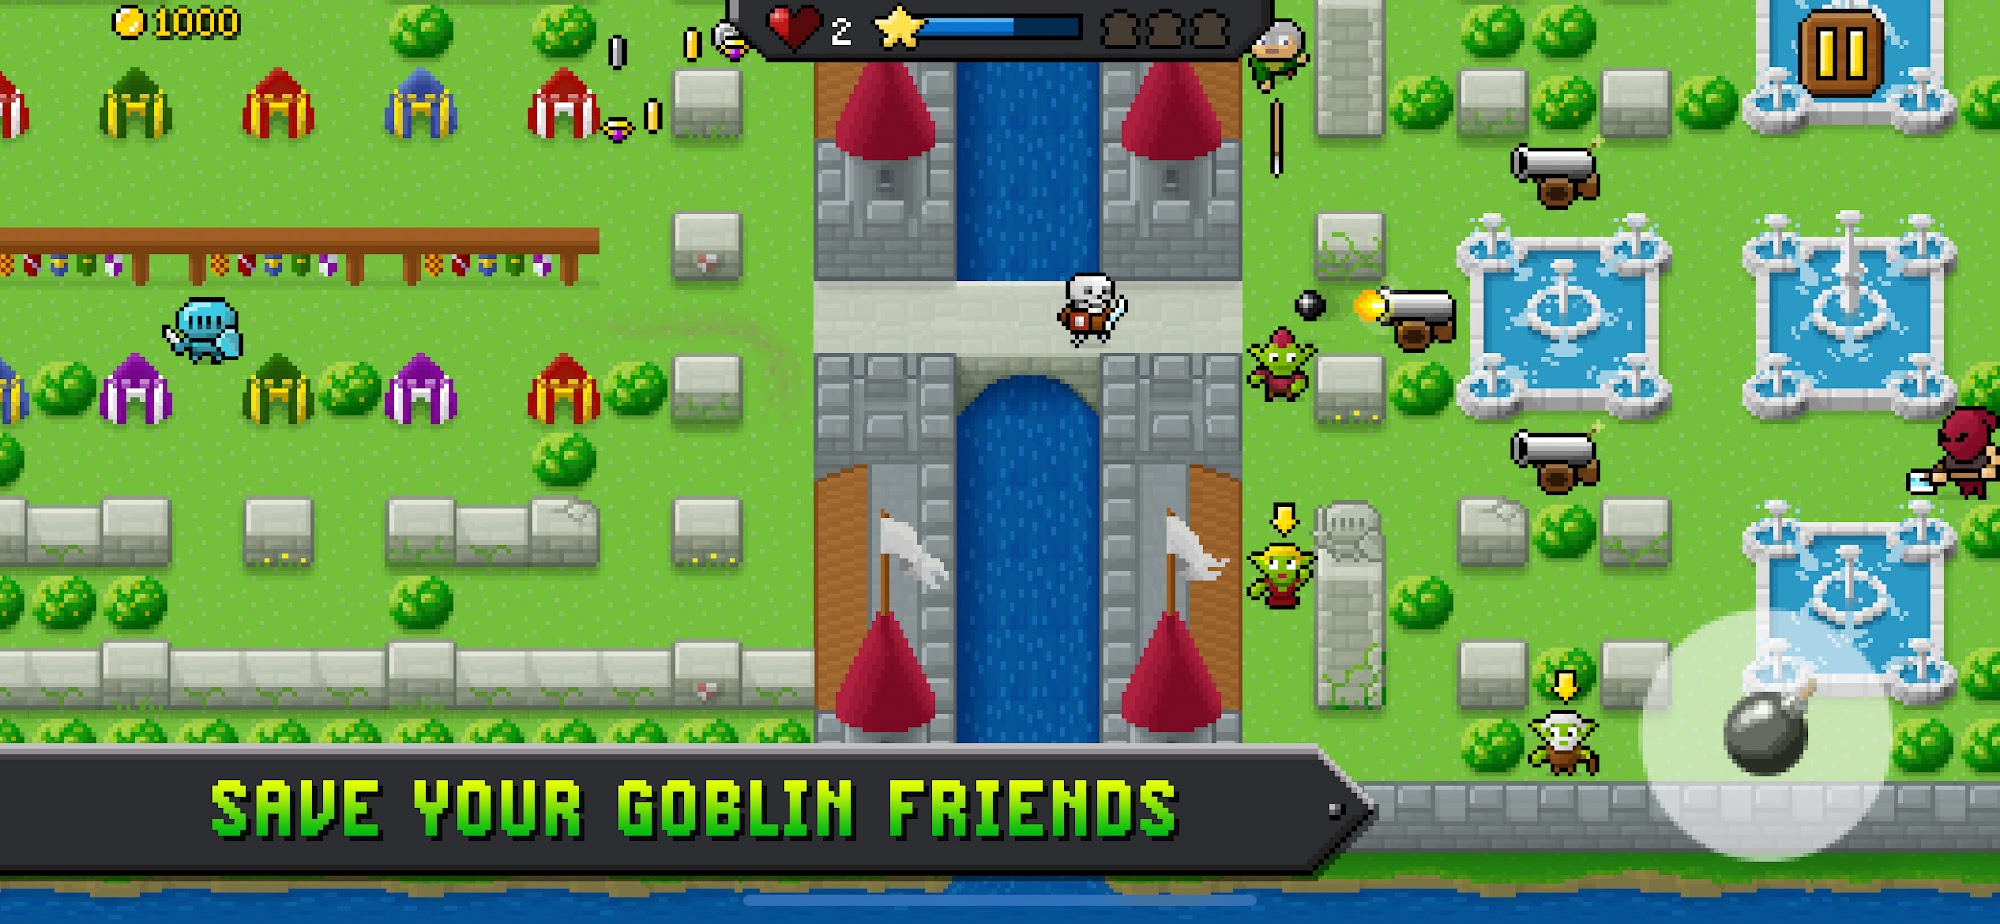 Boom Mania - Android game screenshots.